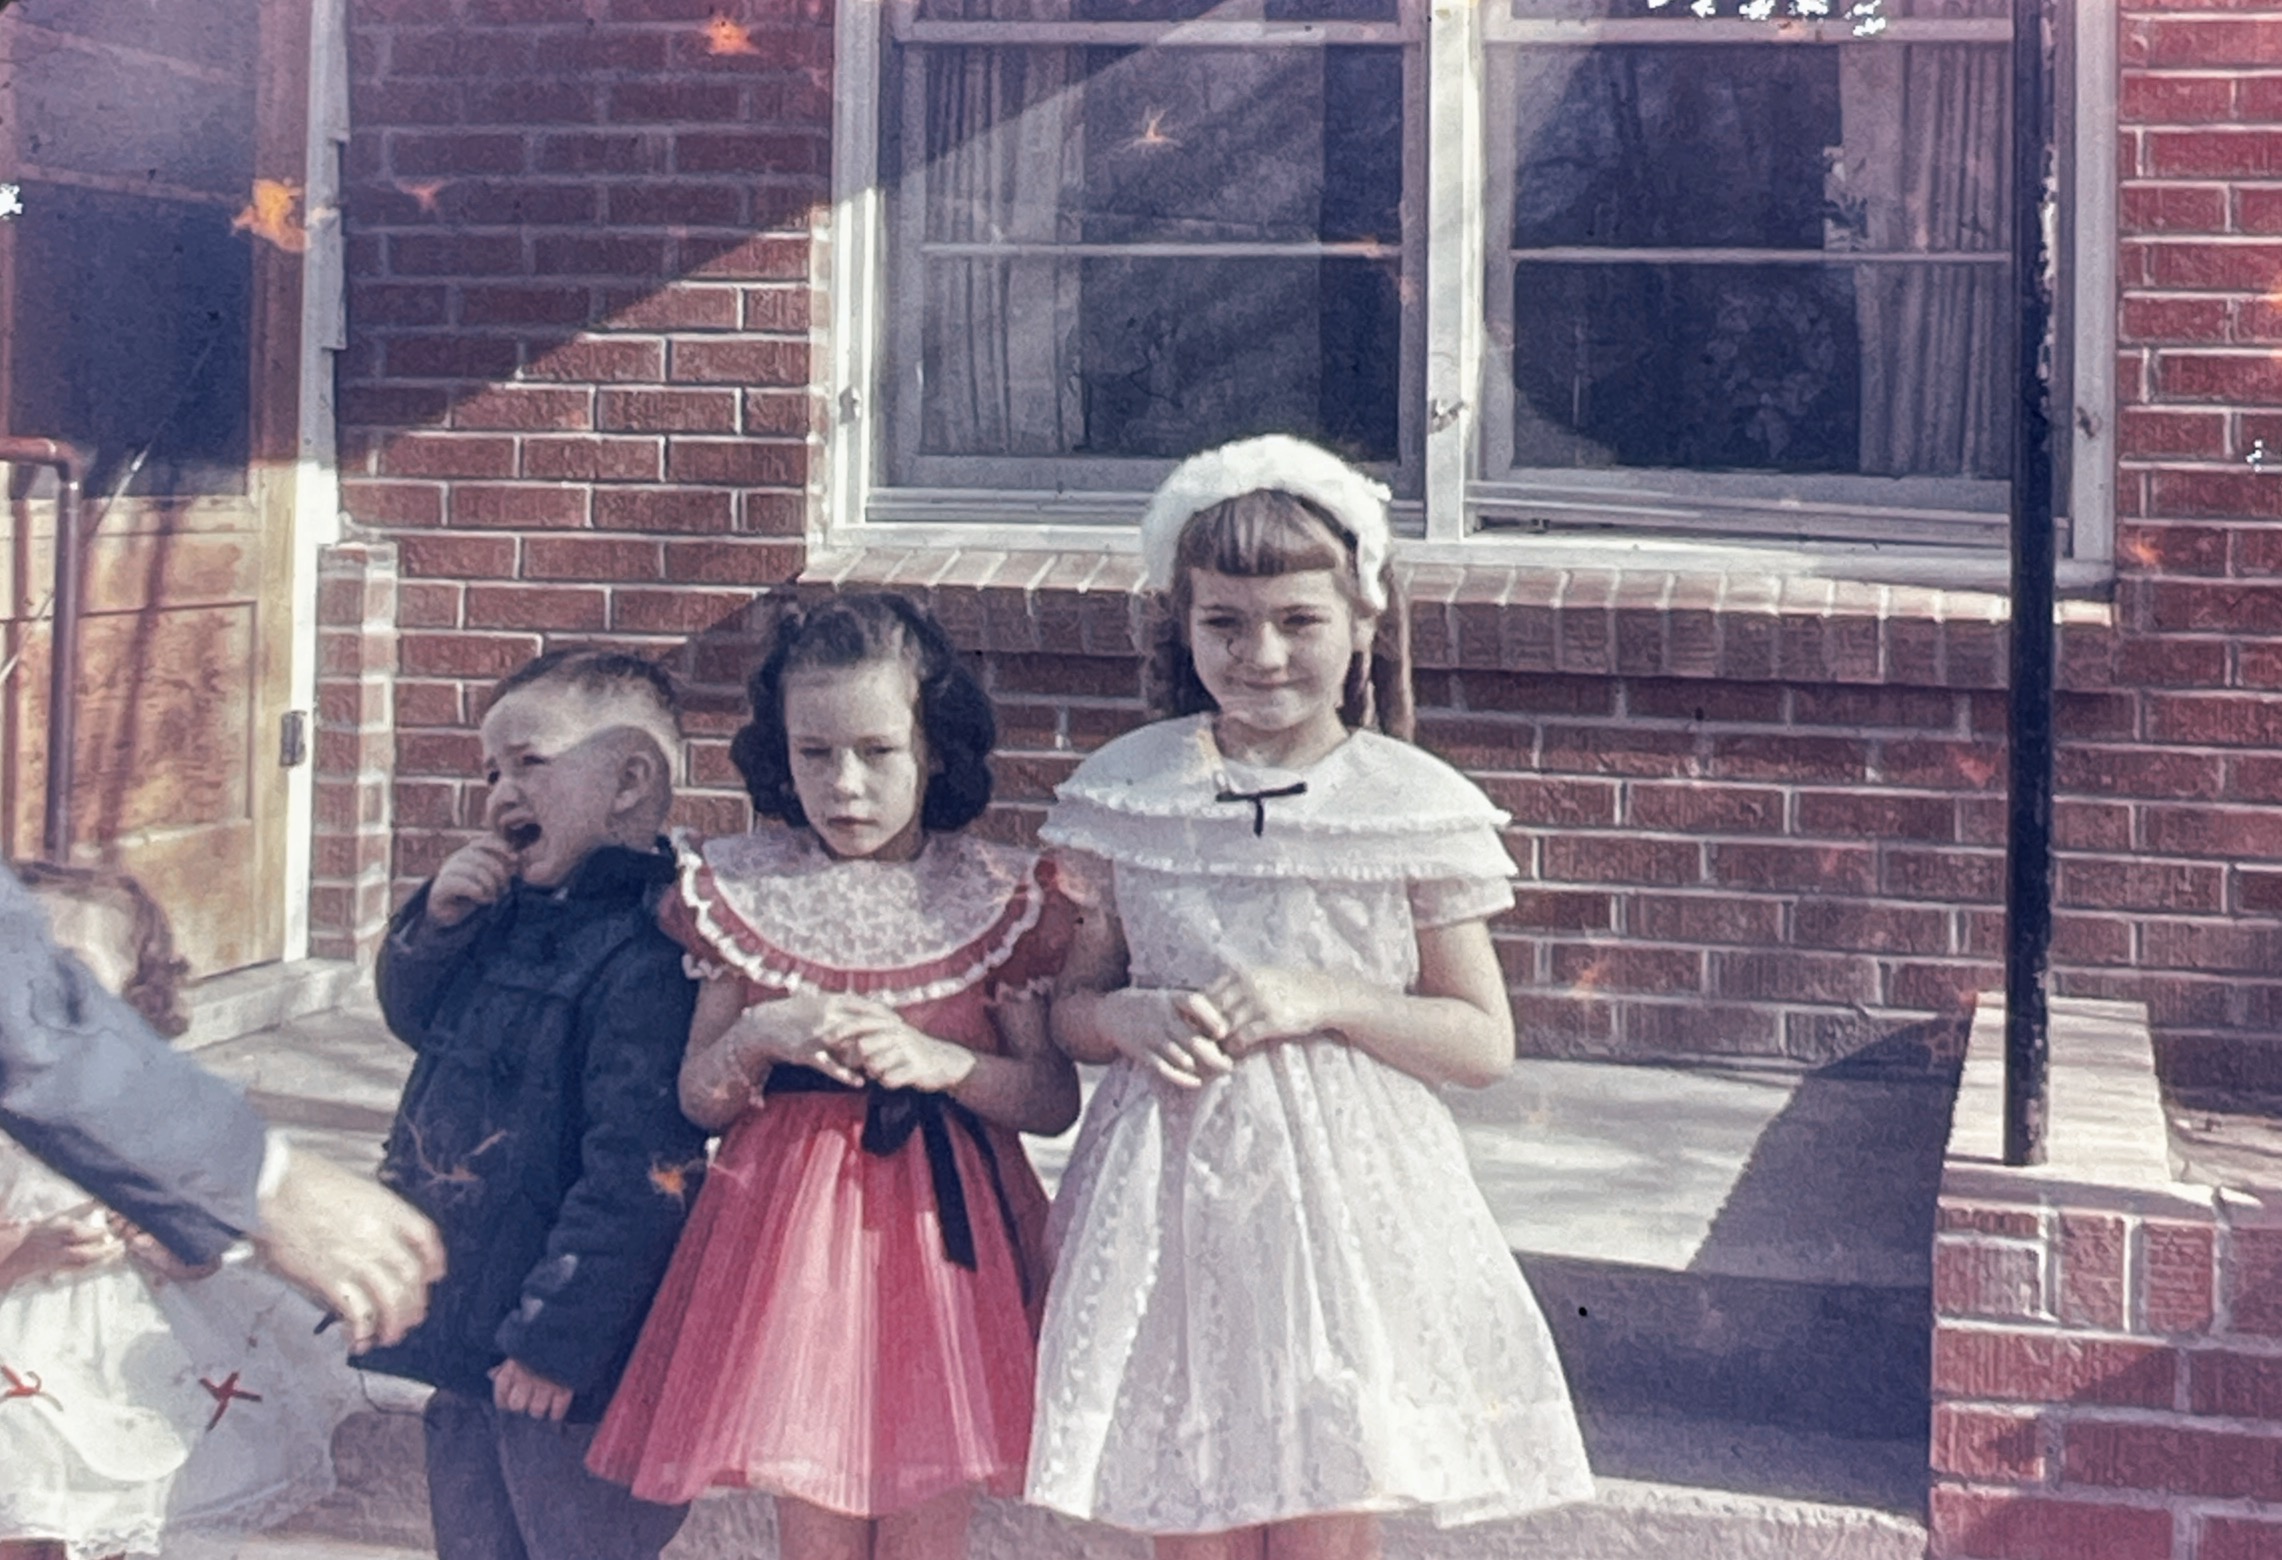 Keith, Louise, and Wanda Dec. 29, 1958